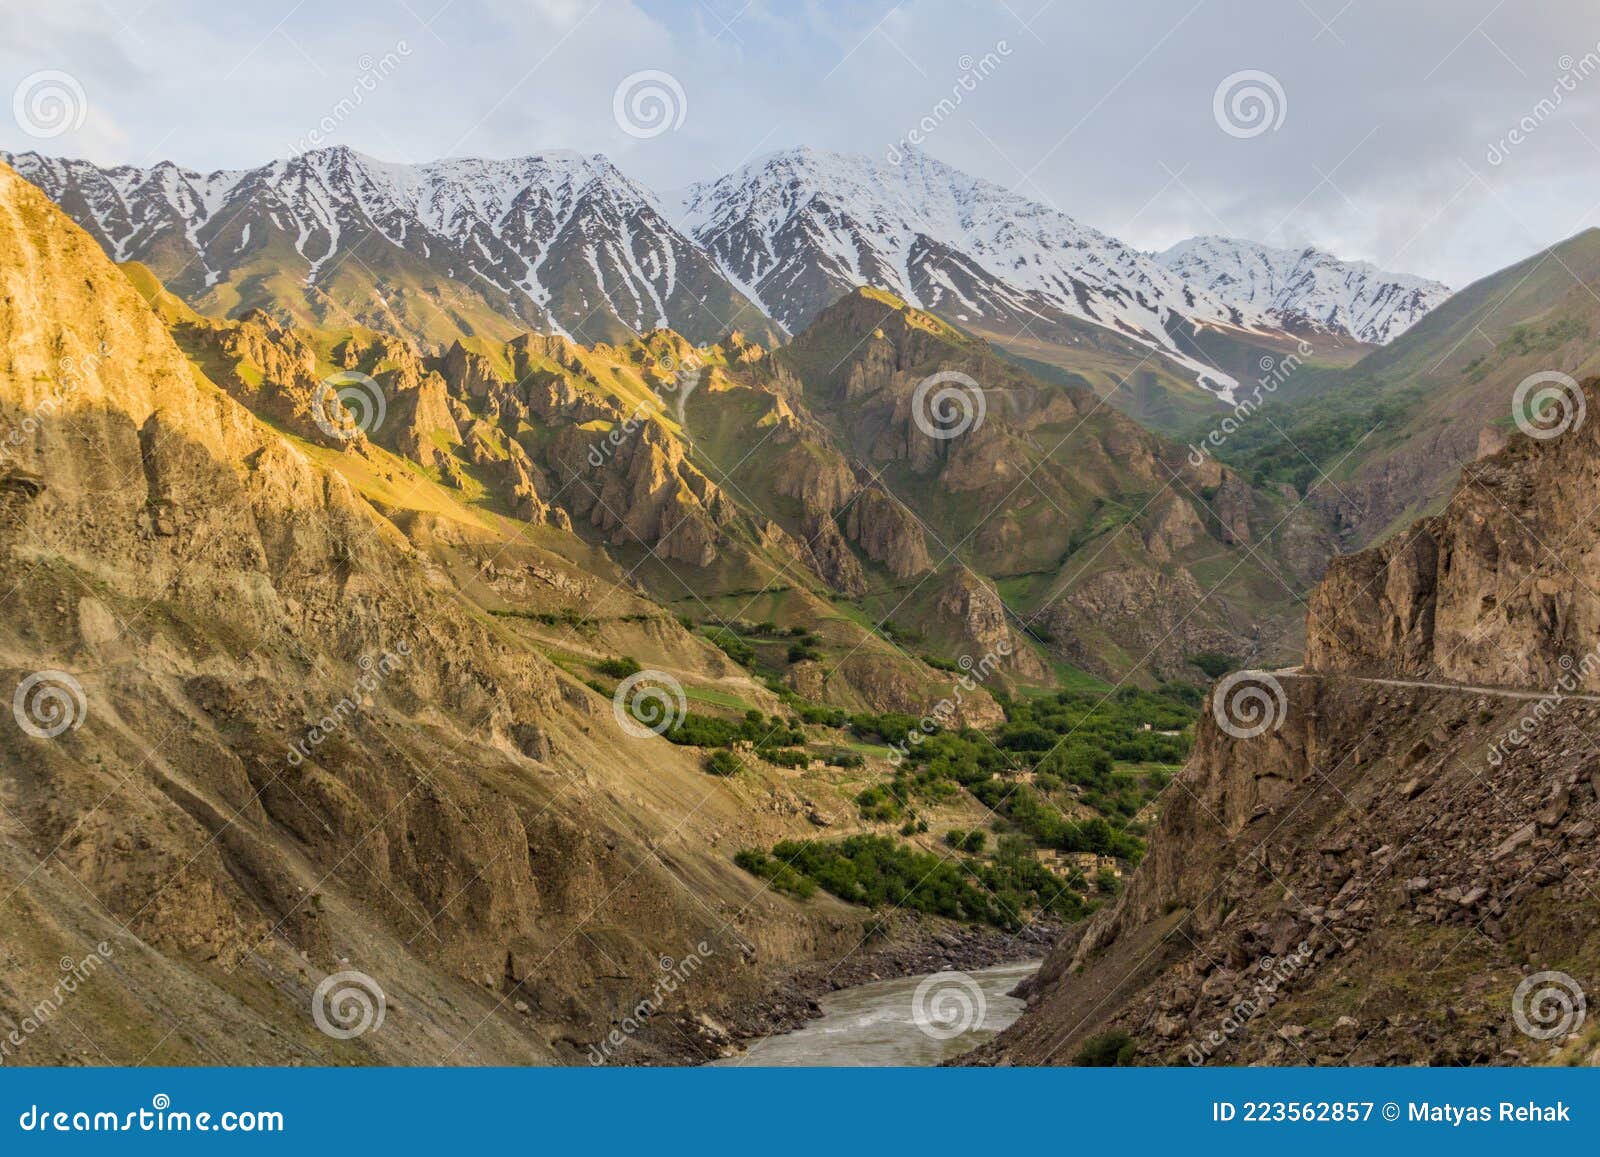 river panj pyandzh valley between tajikistan and afghanist